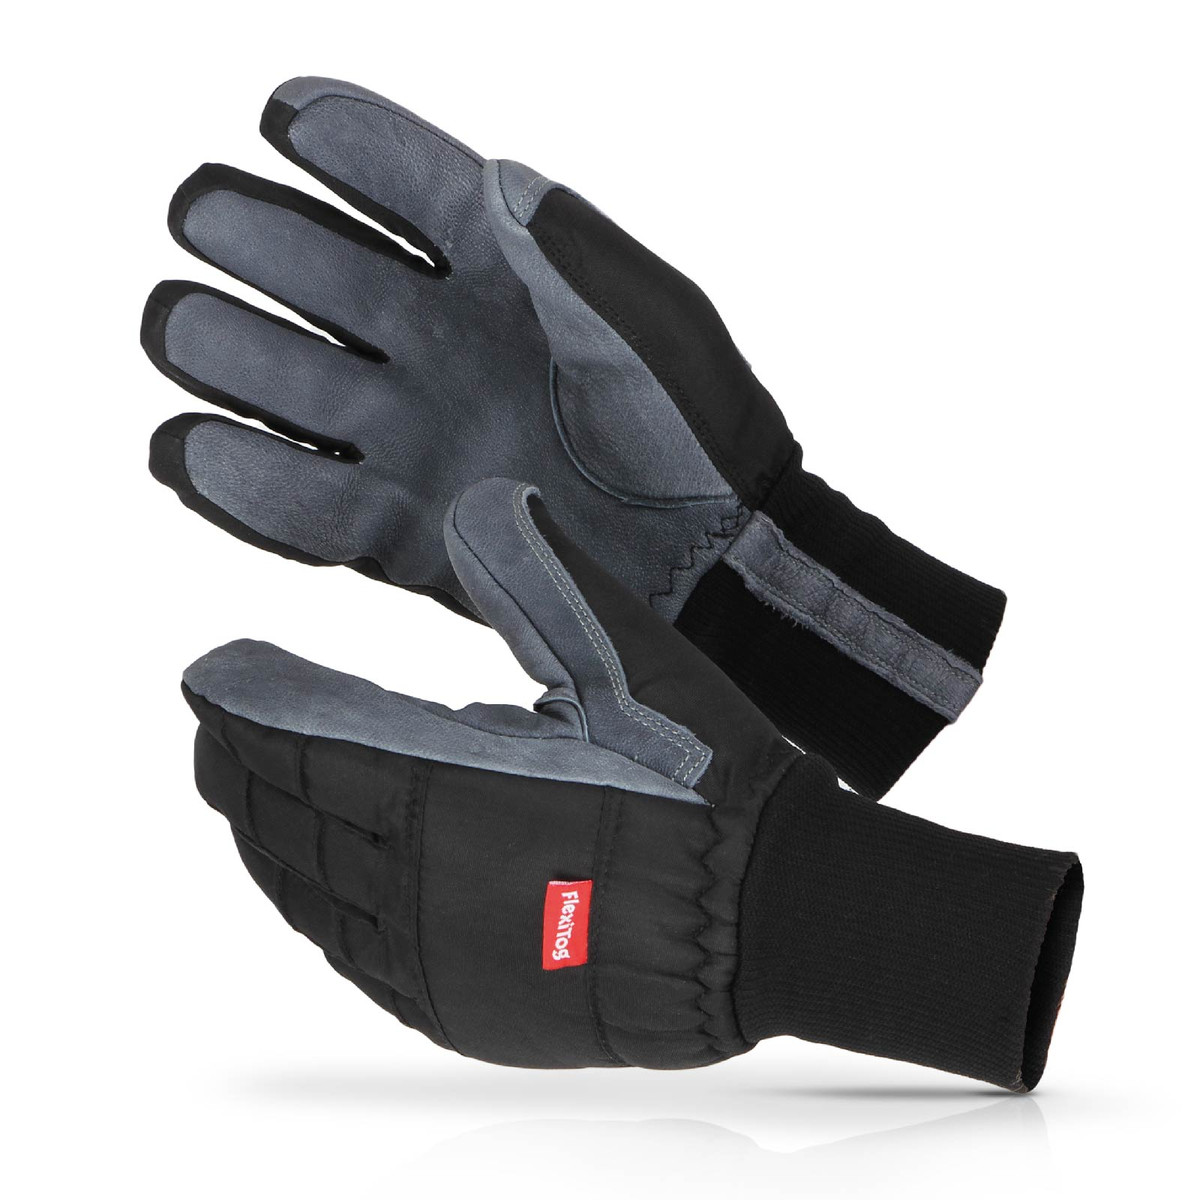 Flexitog Arctic 640 Freezer Gloves